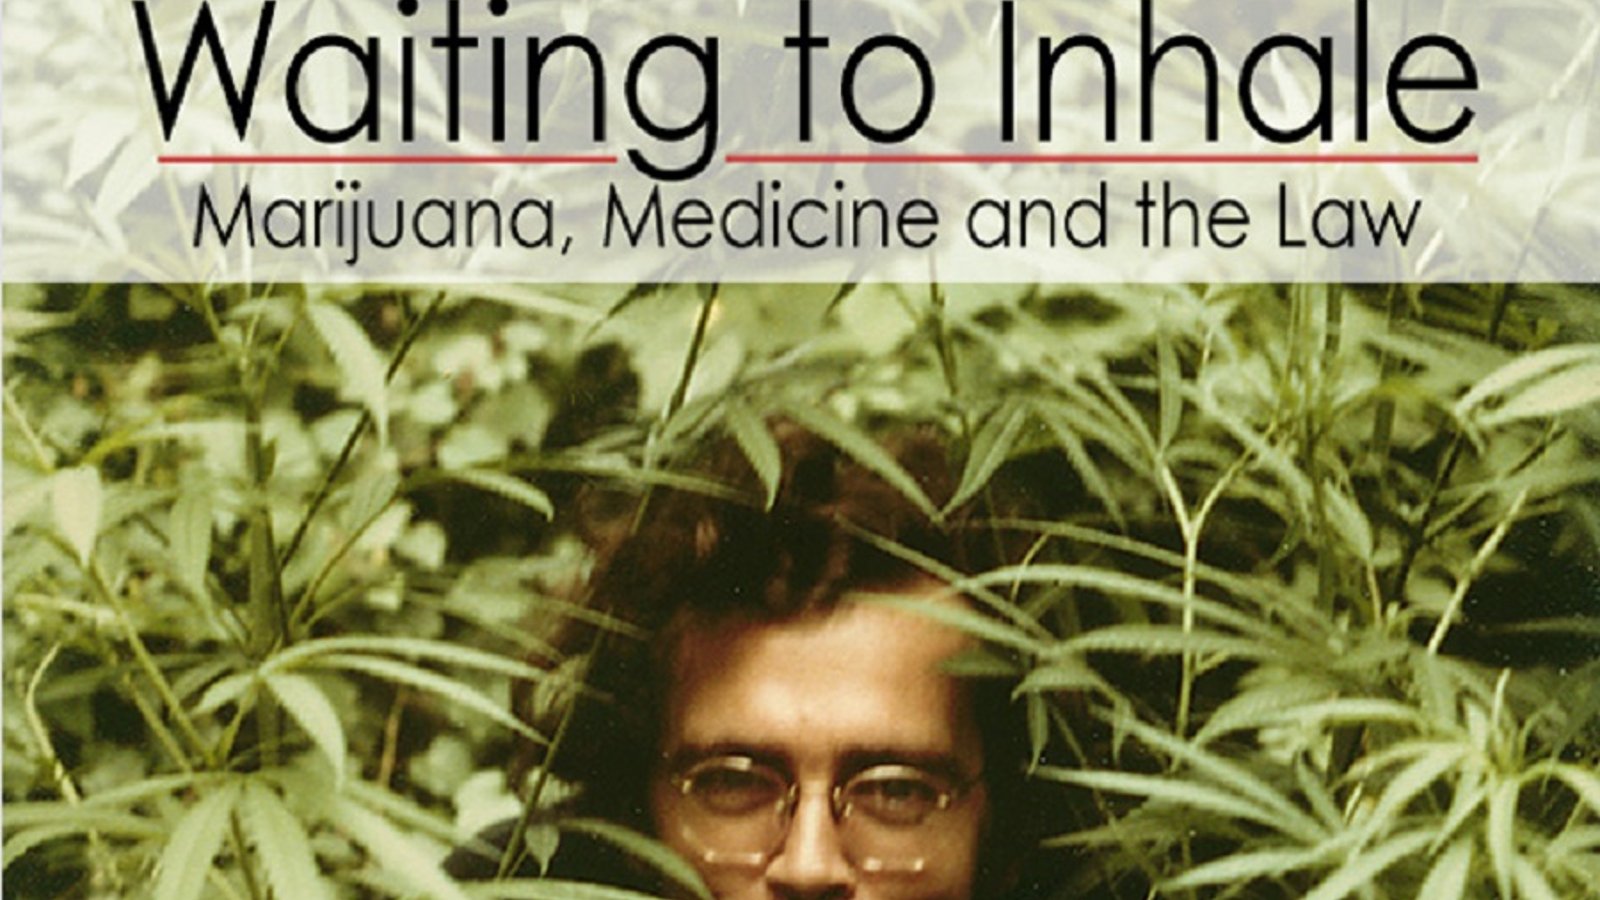 Waiting to inhale: Marijuana, Medicine and the Law